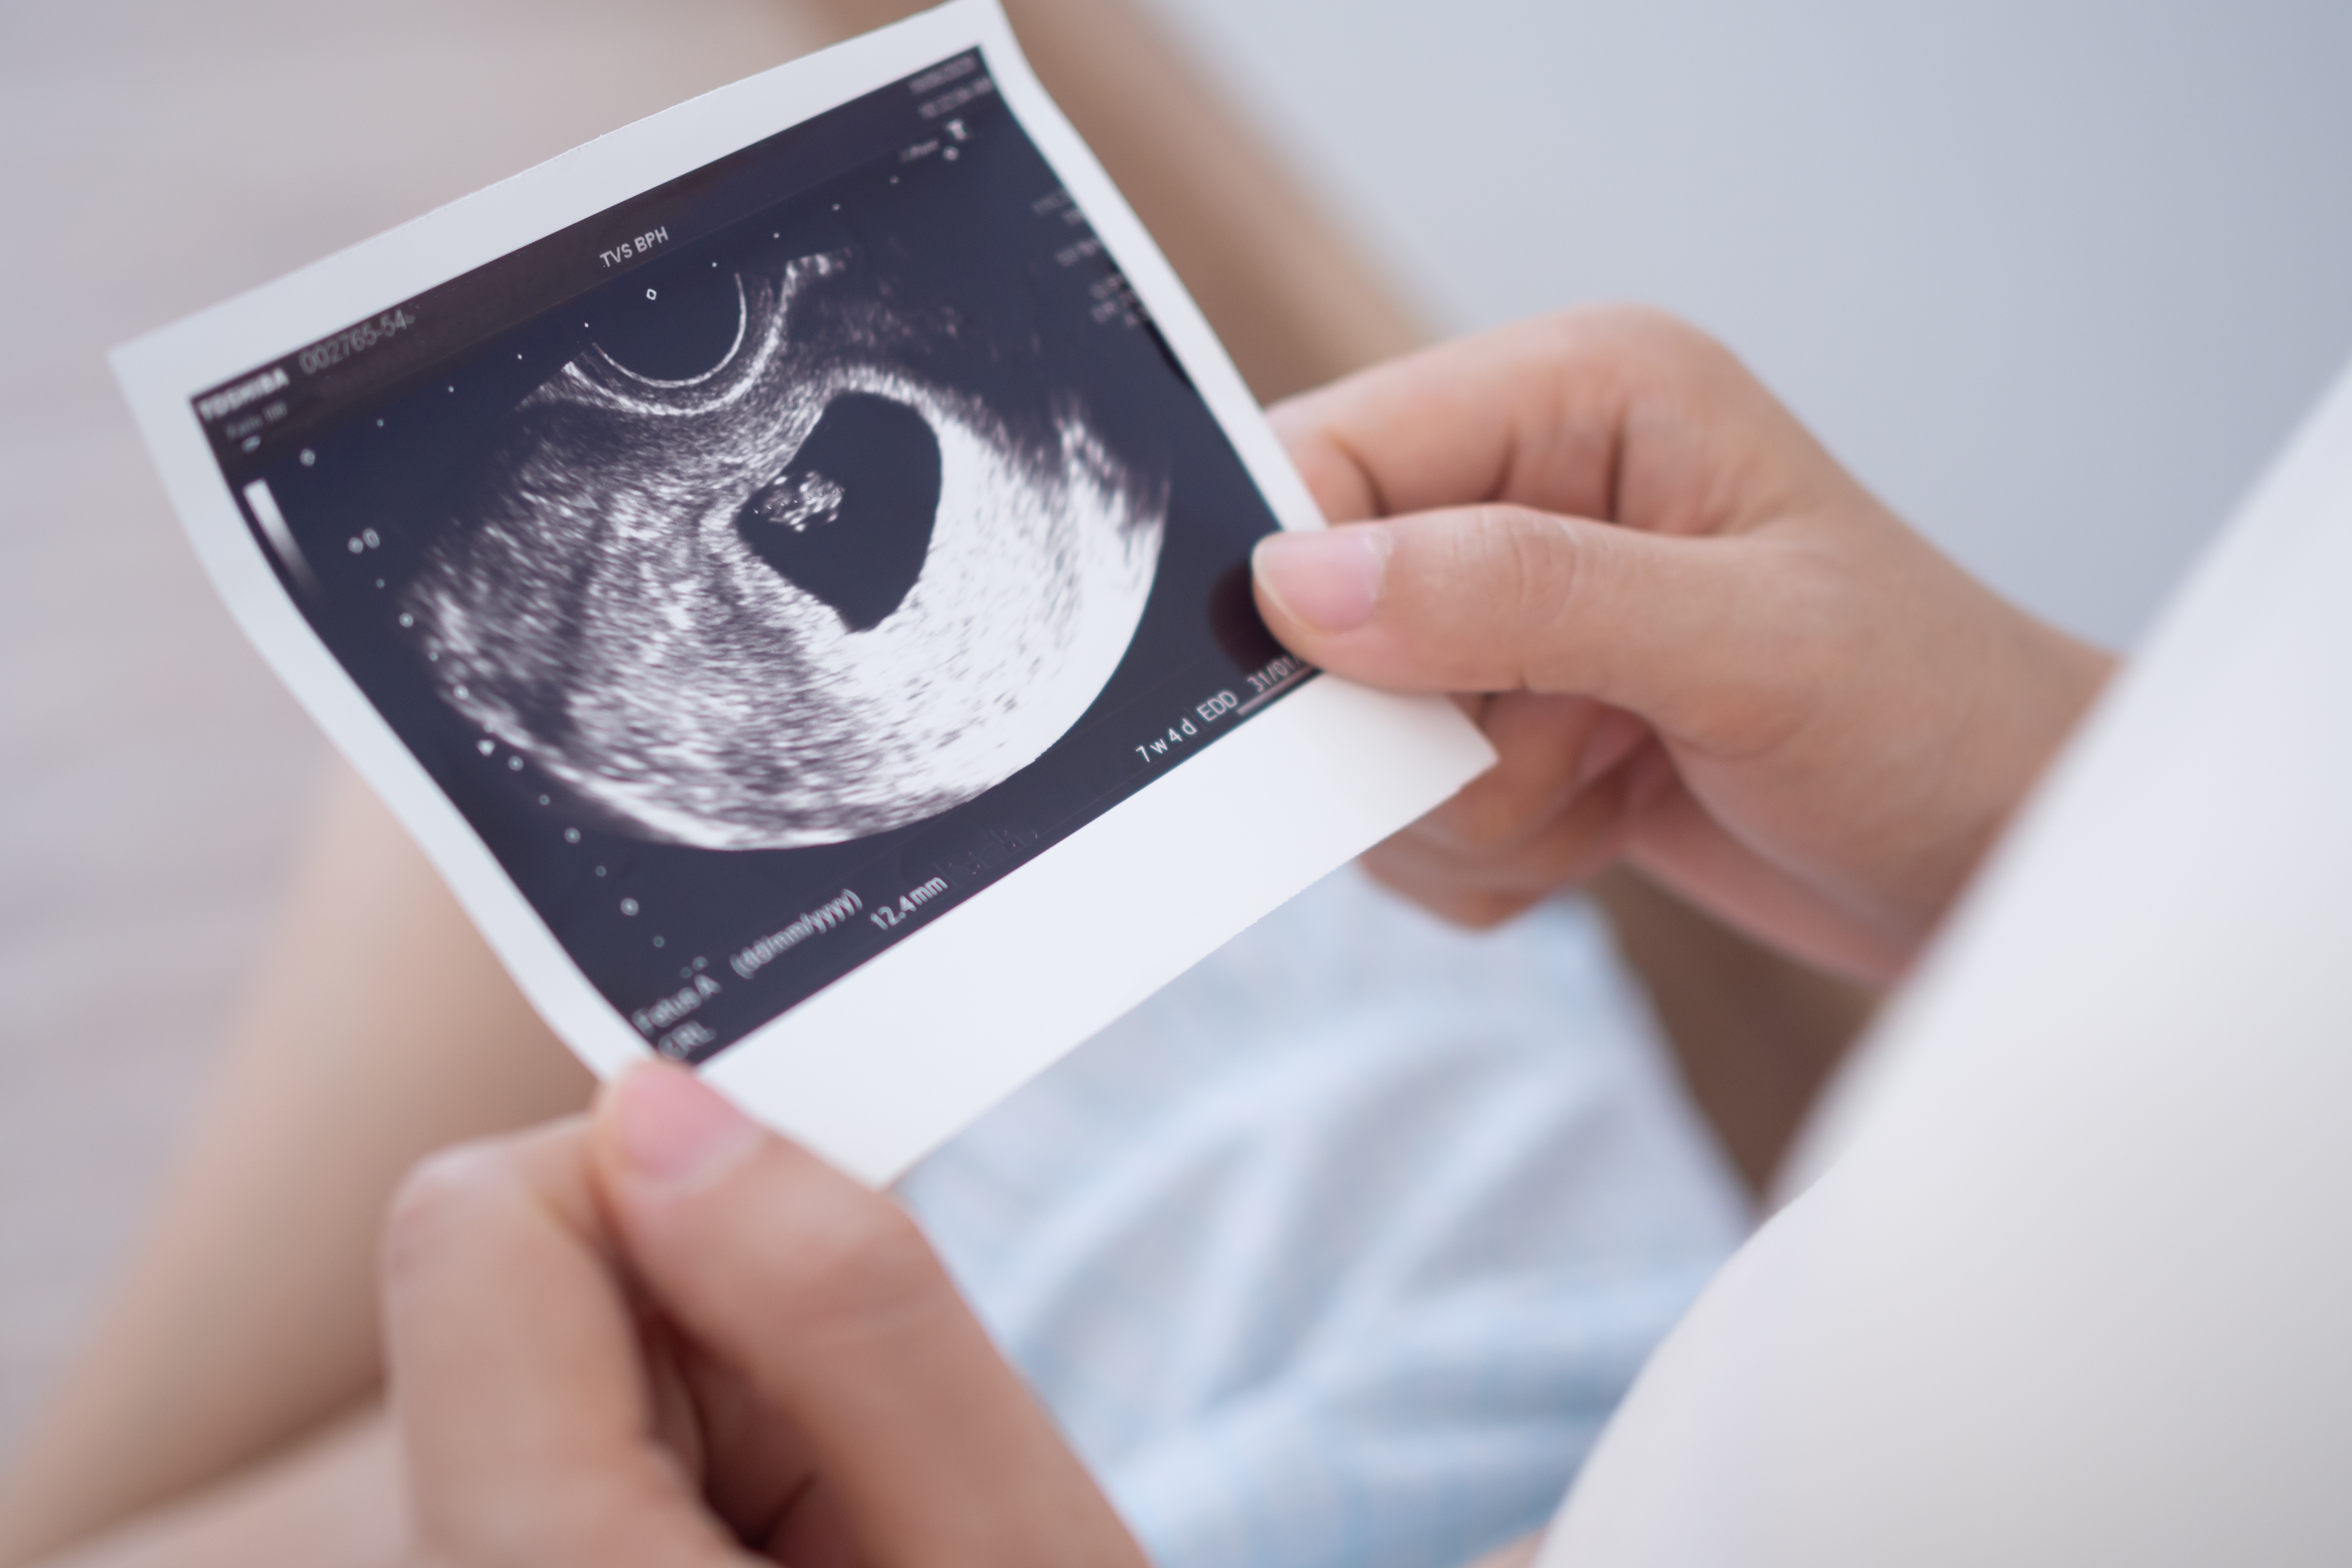 A woman holding an ultrasound photo of a fetus | Source: Shutterstock